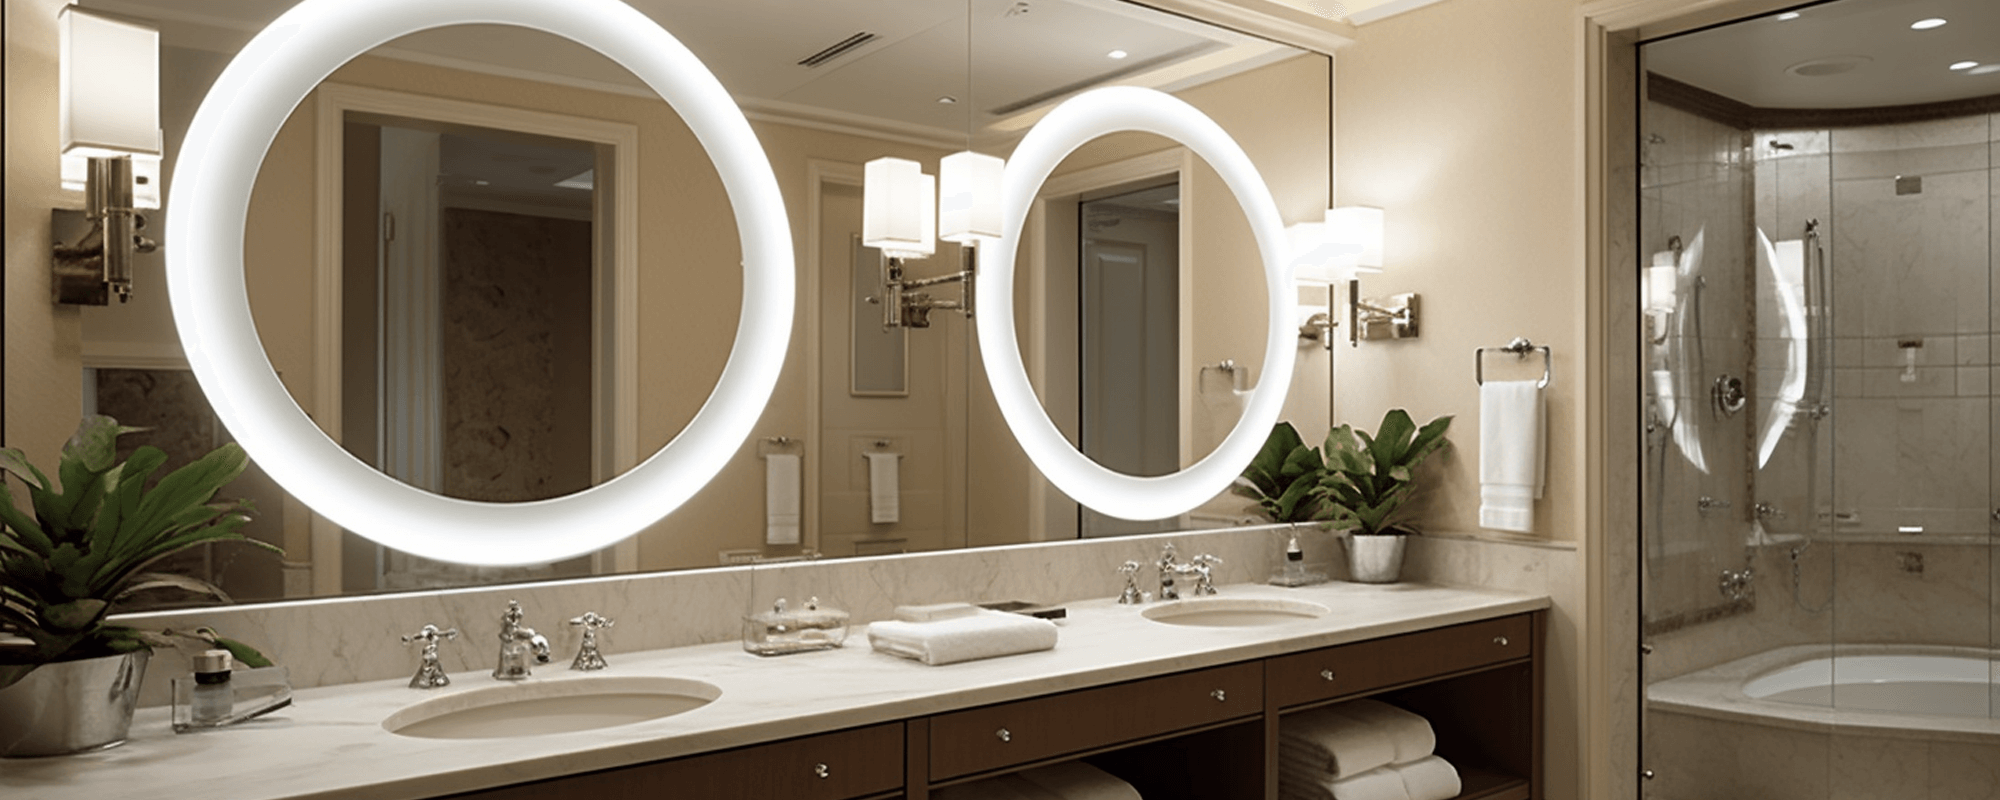 miroir de salle de bain avec appliques